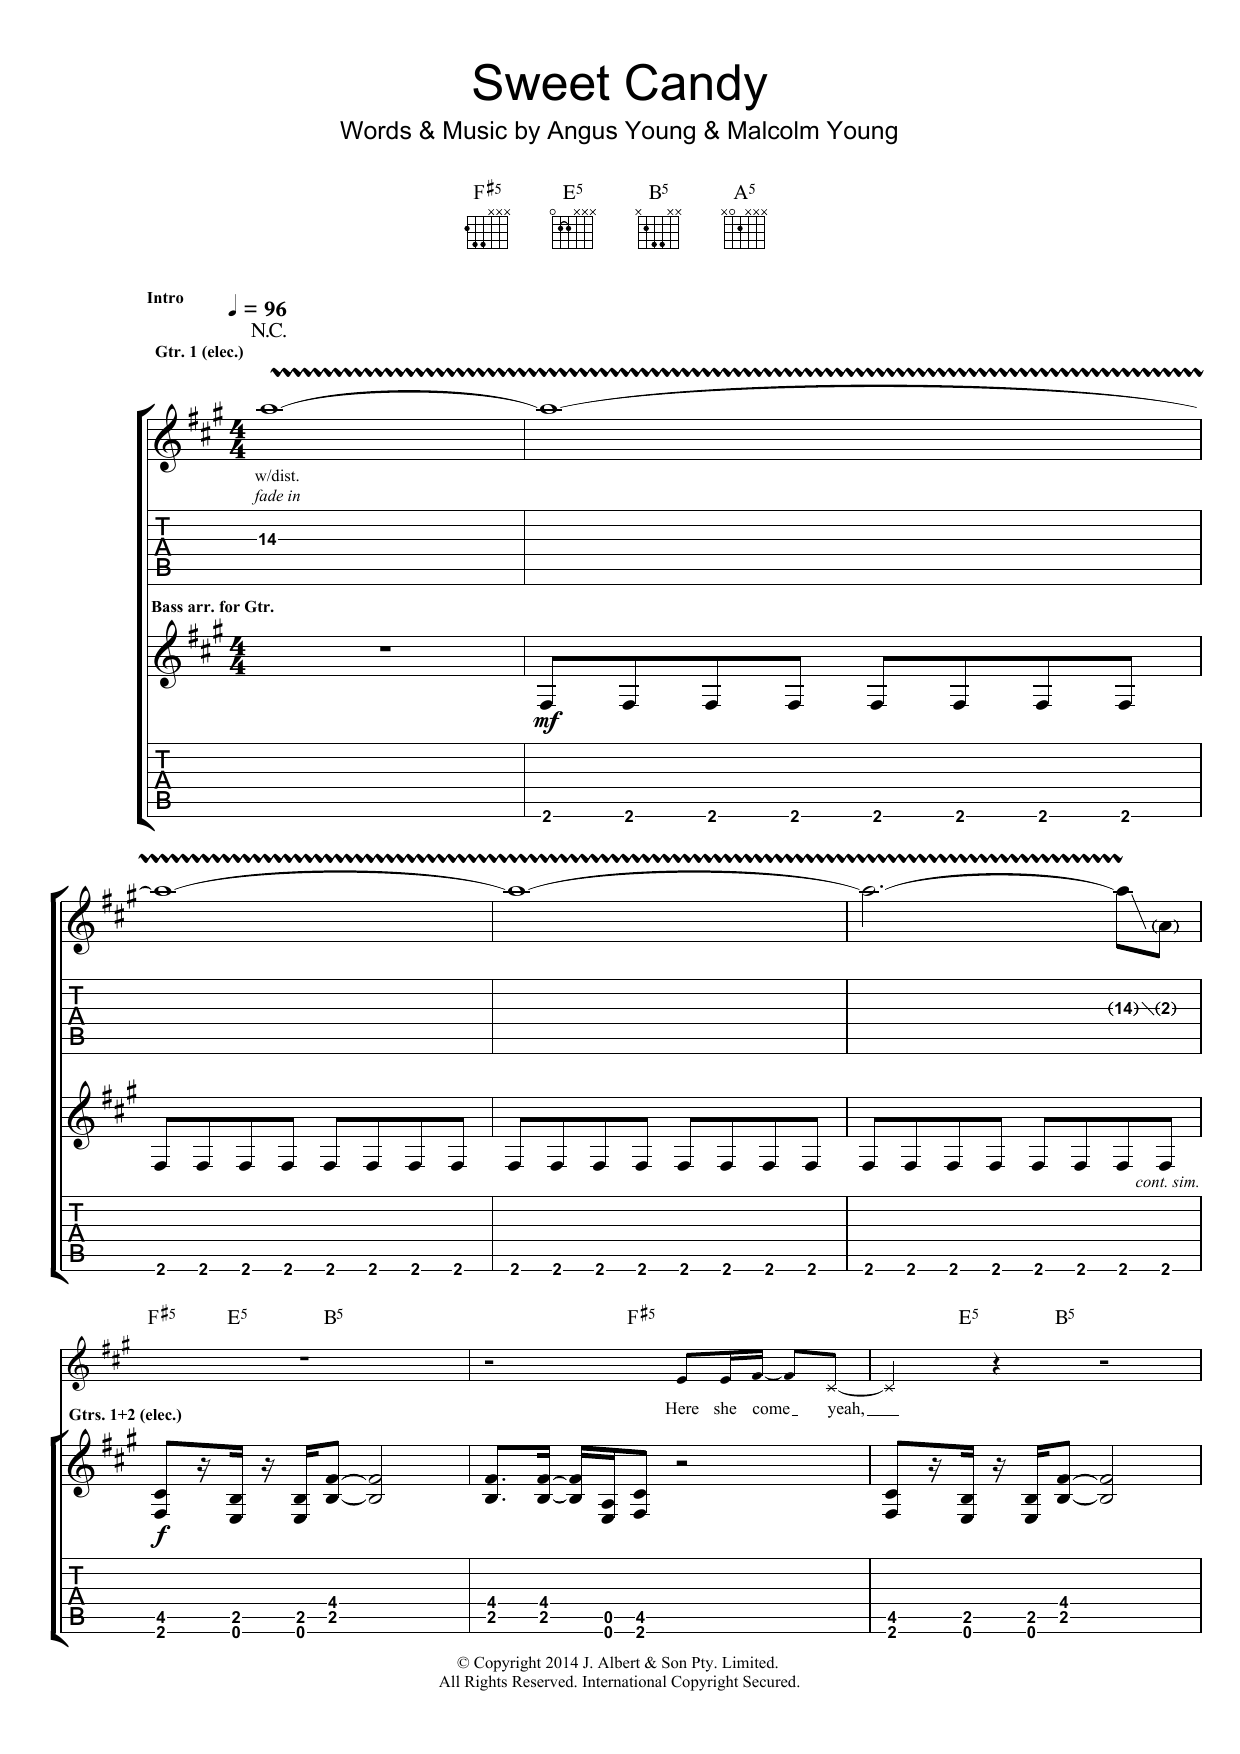 AC/DC "Sweet Candy" Sheet Music PDF Notes, Chords | Rock Score Guitar SKU: 120197